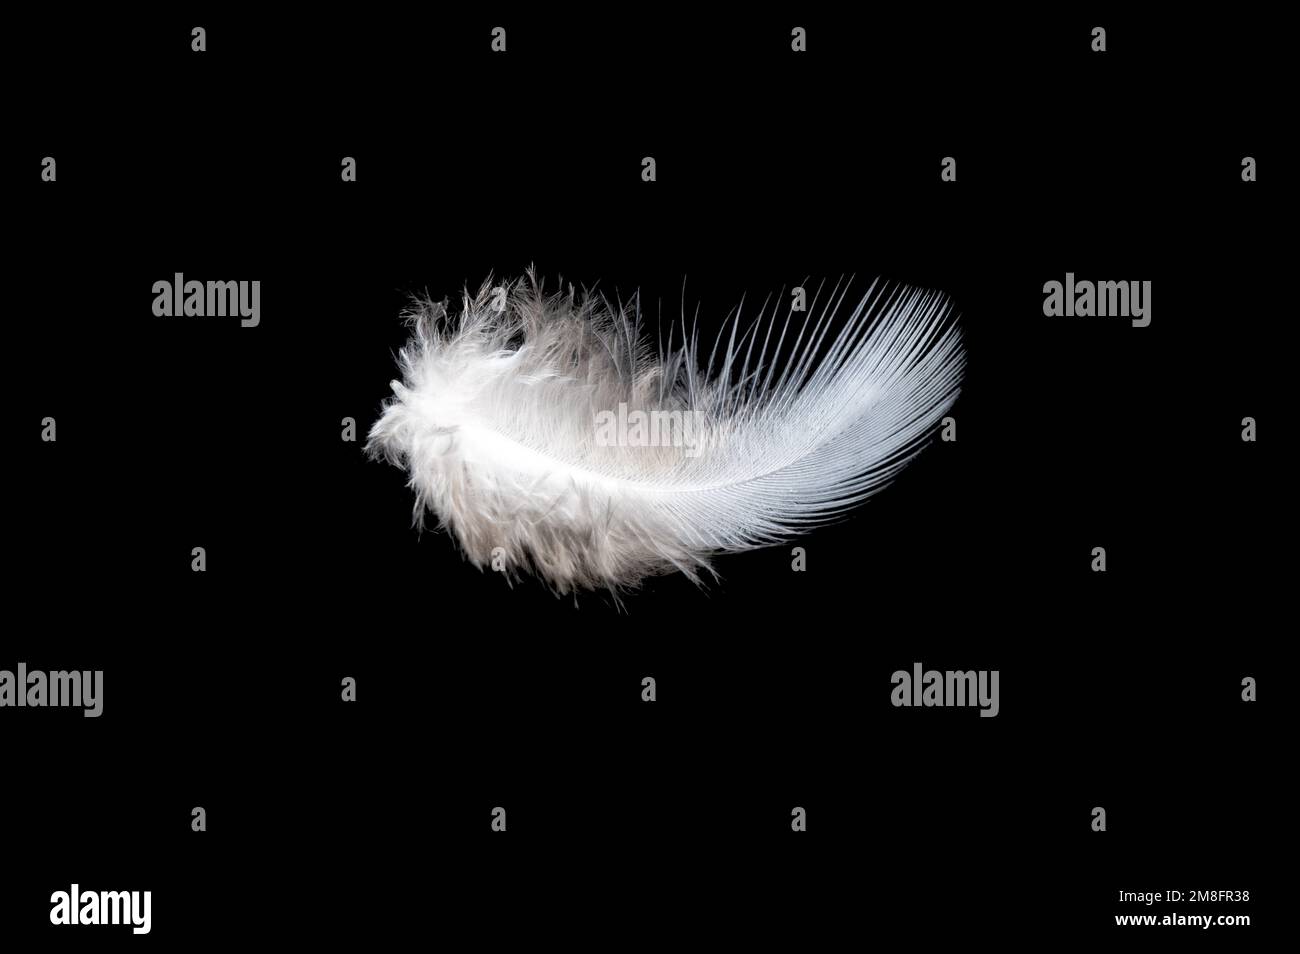 White feather on black background, isolate Stock Photo